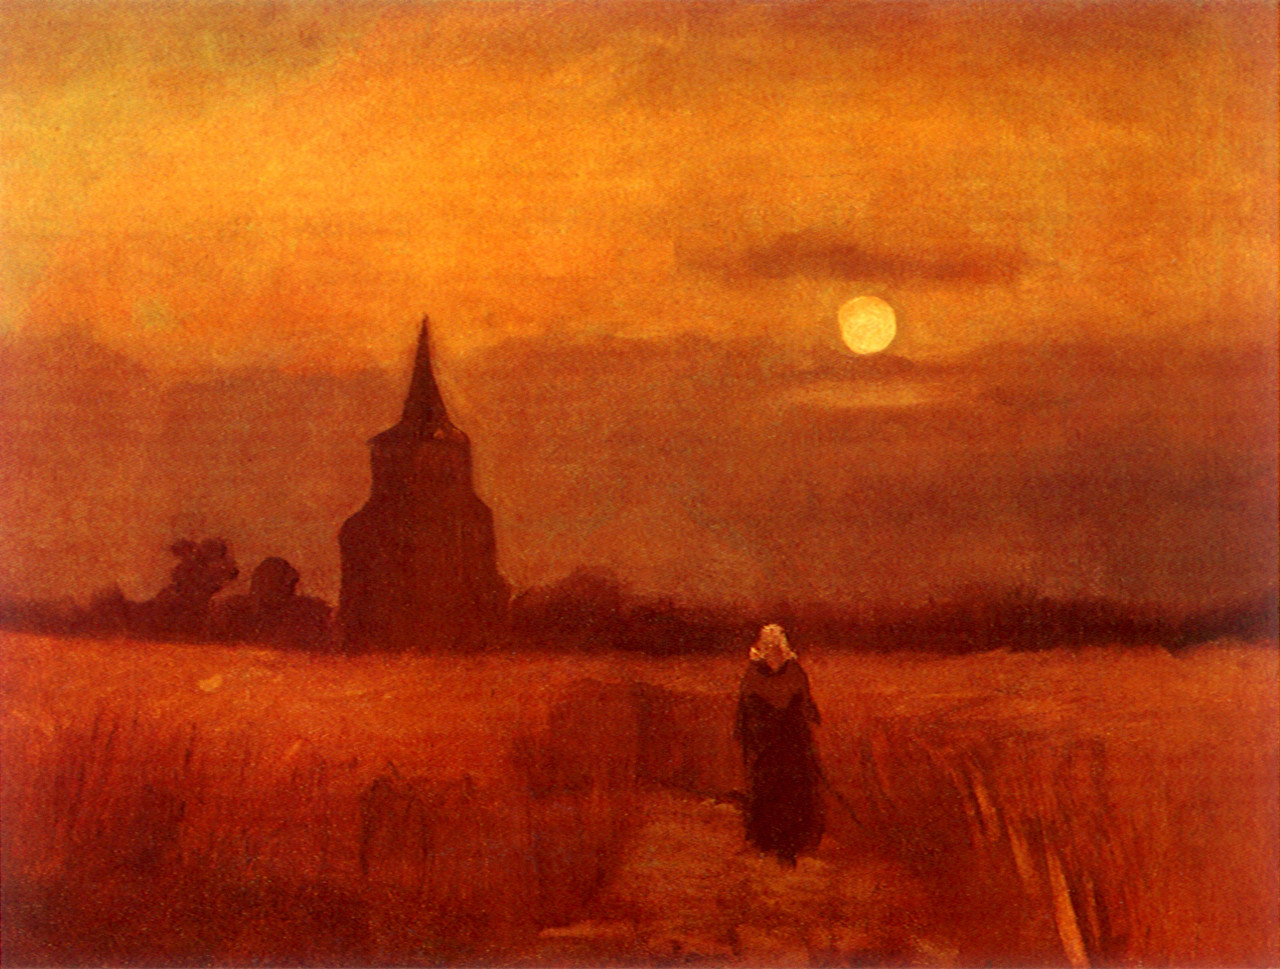 Vincent+Van+Gogh-1853-1890 (888).jpg